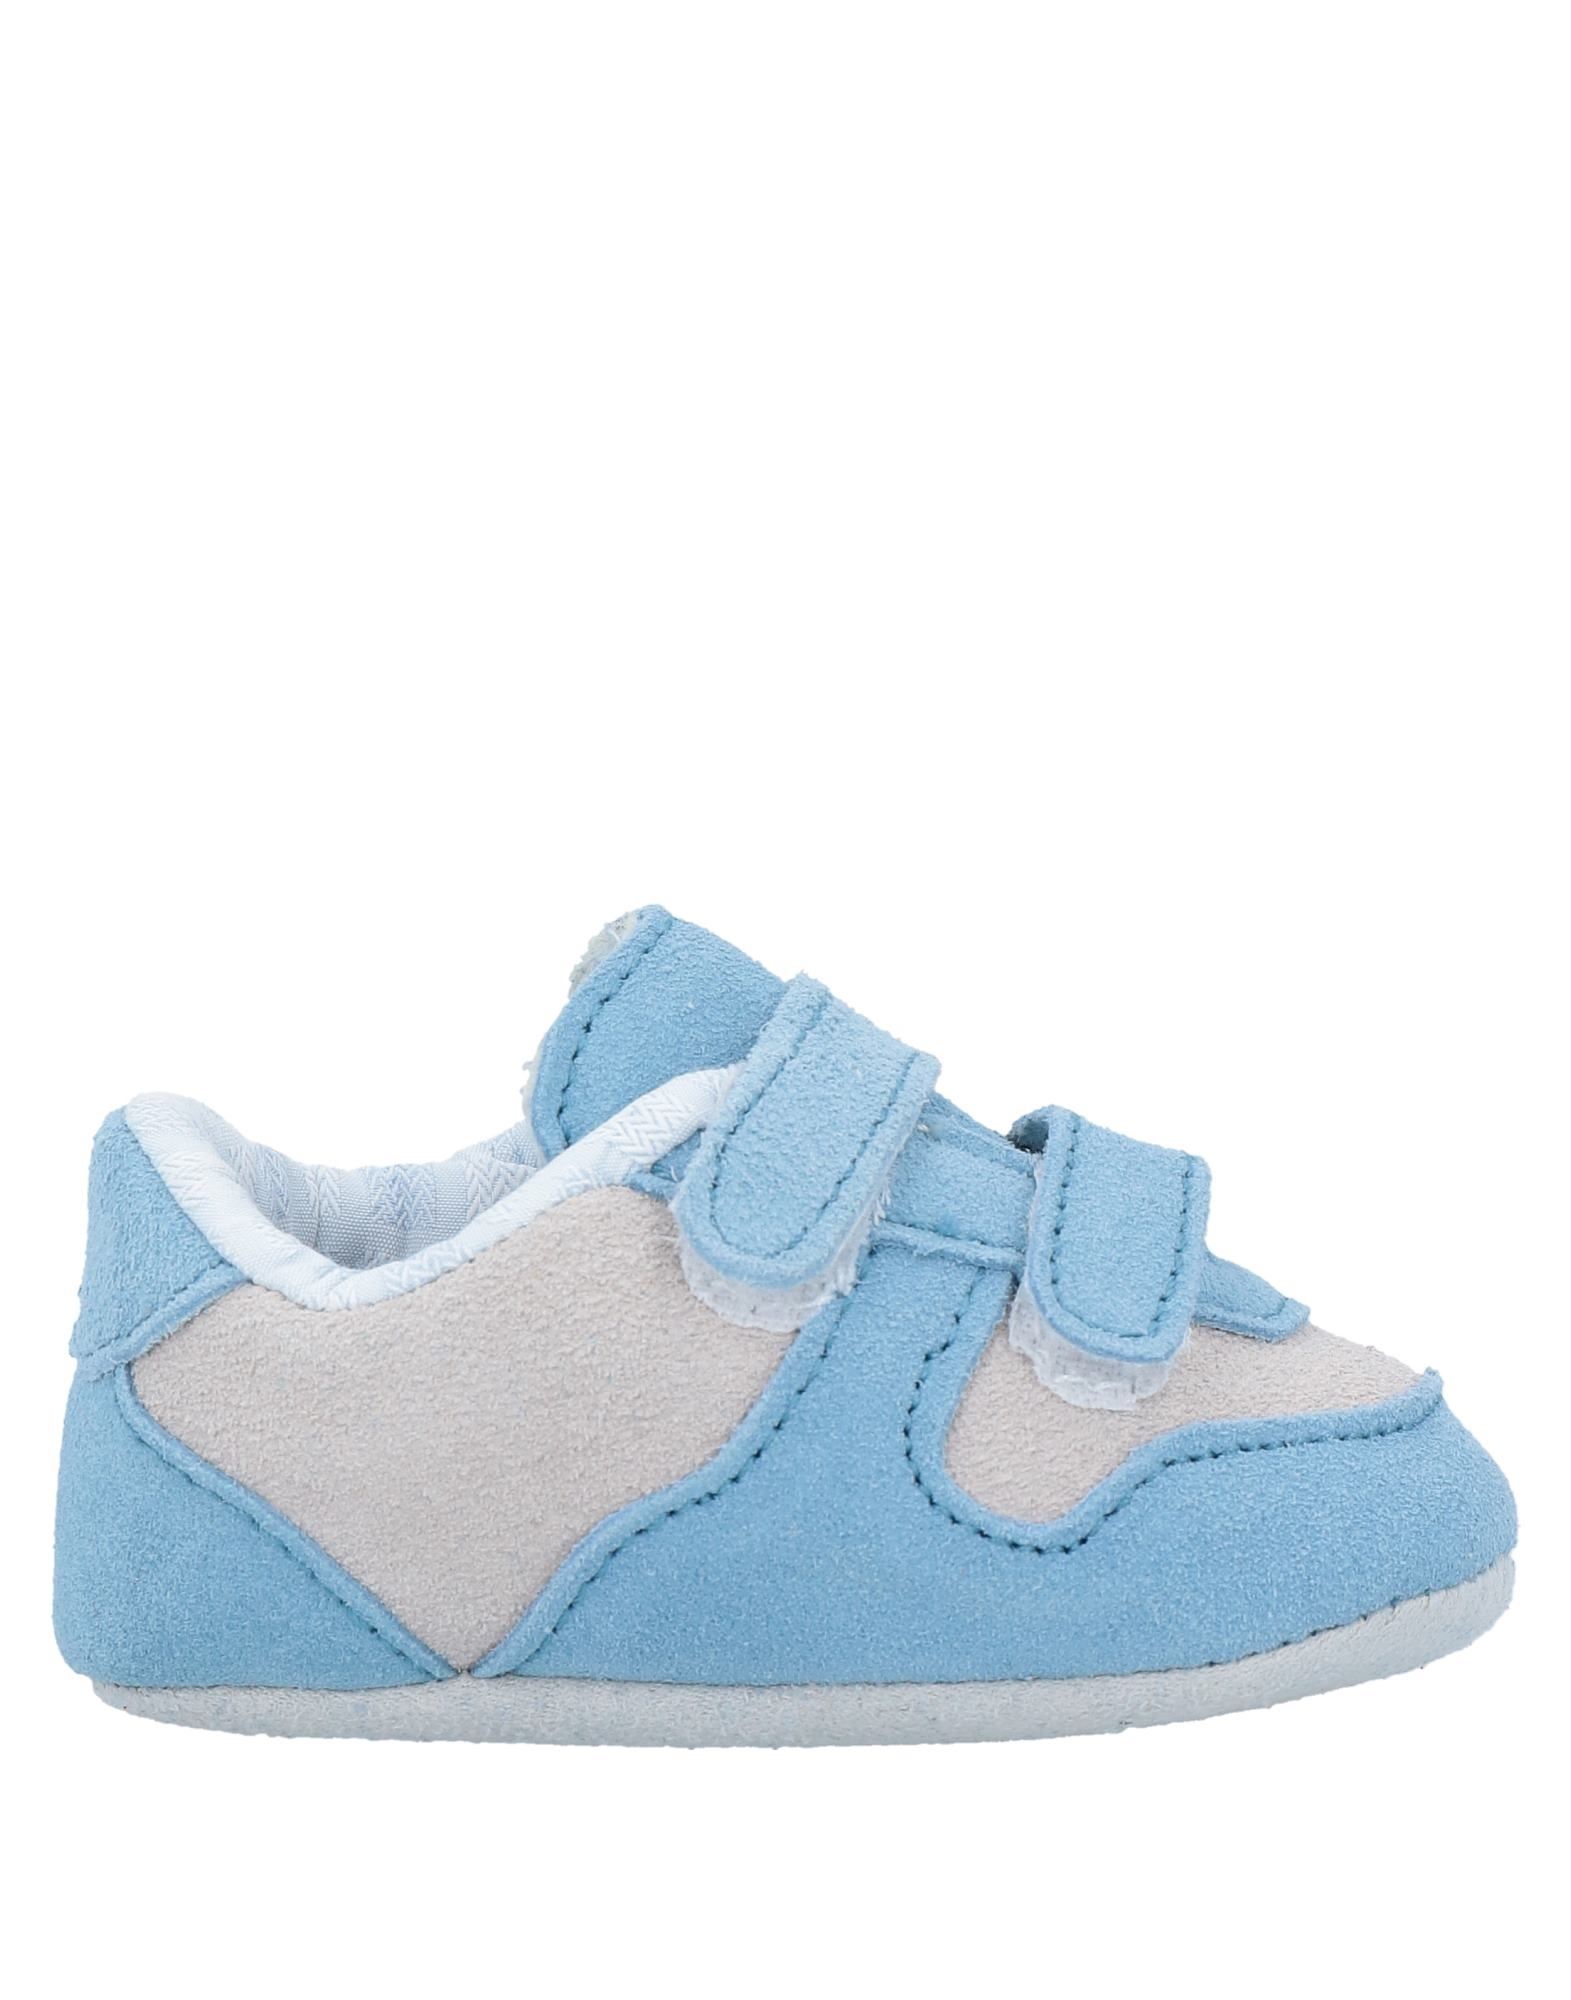 FUN & FUN Schuhe Für Neugeborene Kinder Azurblau von FUN & FUN